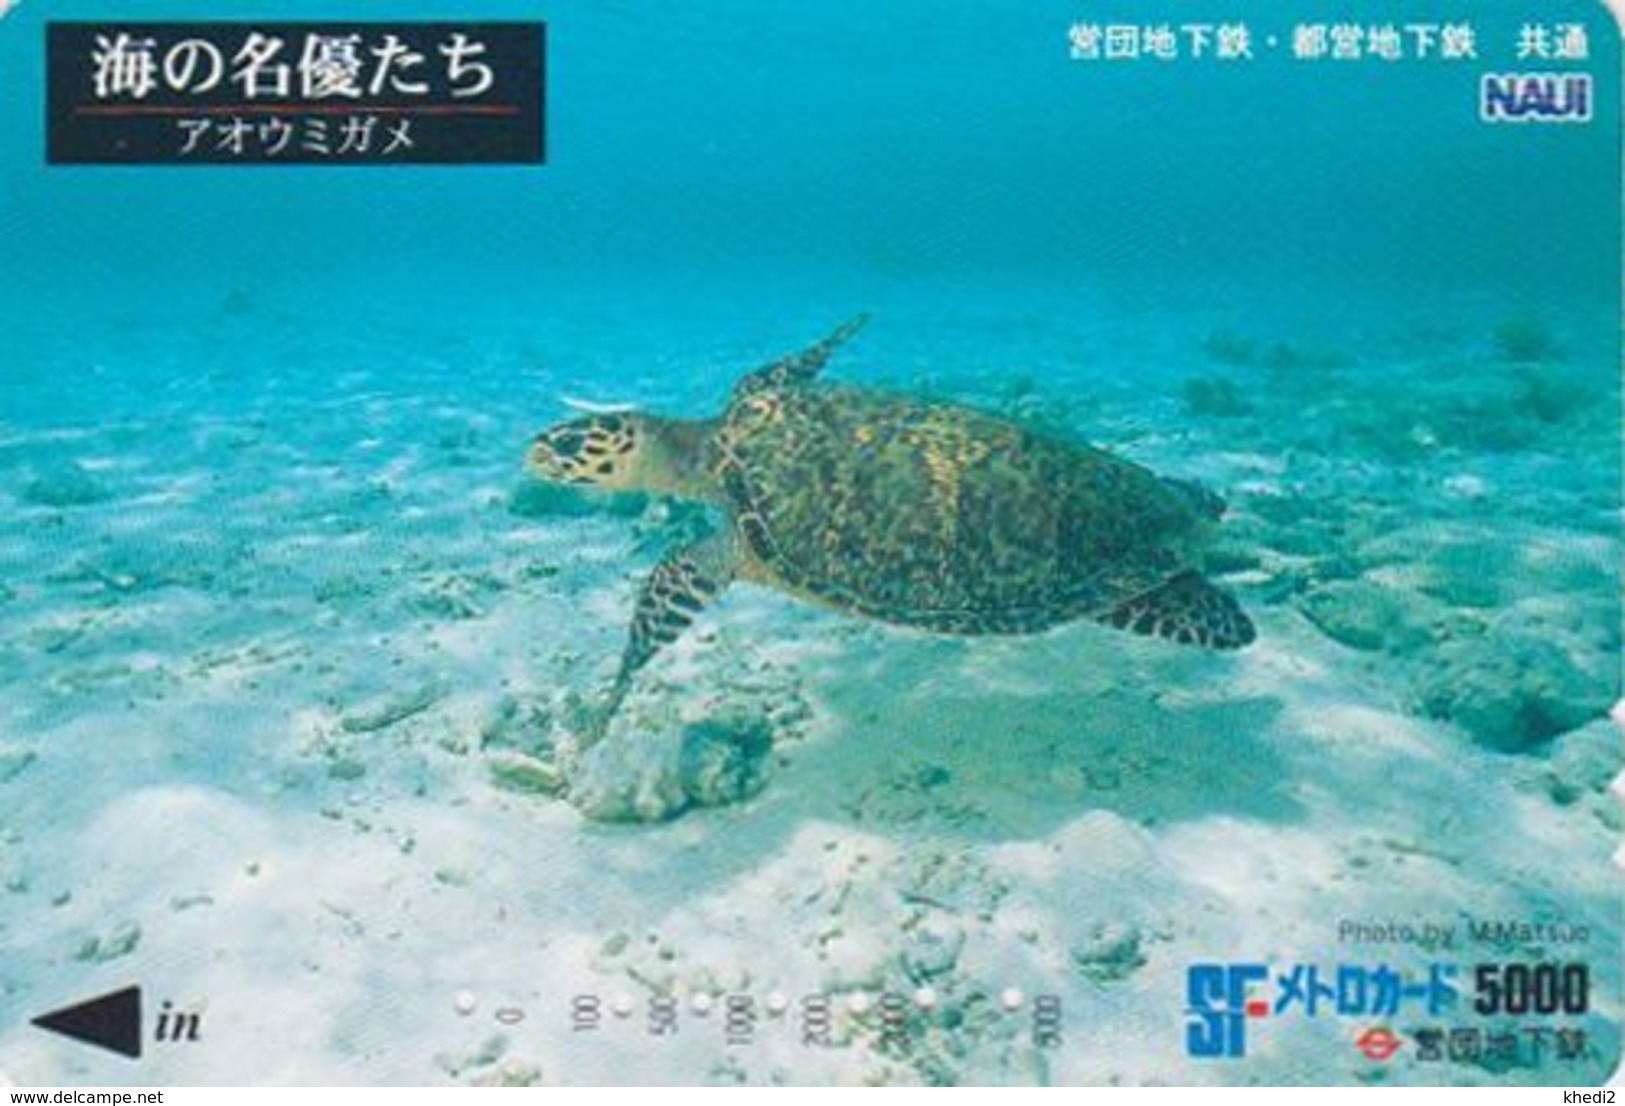 Carte Prépayée JAPON - ANIMAL - Série NAUI DIVING 7/8 - TORTUE - TURTLE JAPAN Prepaid Metro Ticket Card - 192 - Schildpadden